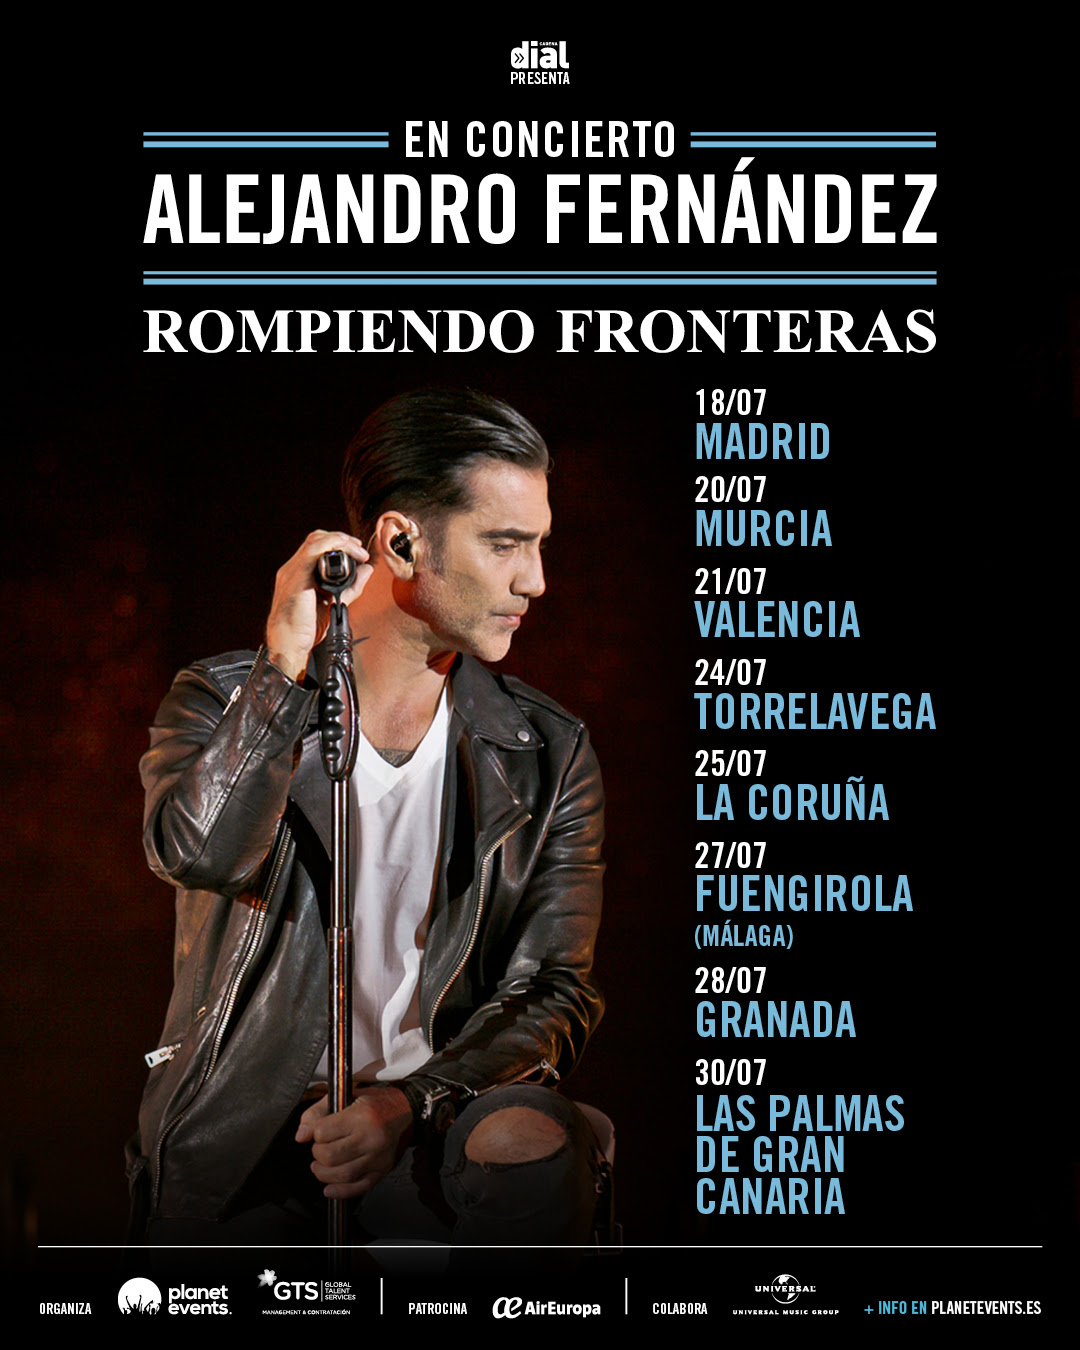 Alejandro Fernandez Rompiendo Fronteras Tour Final.jpg